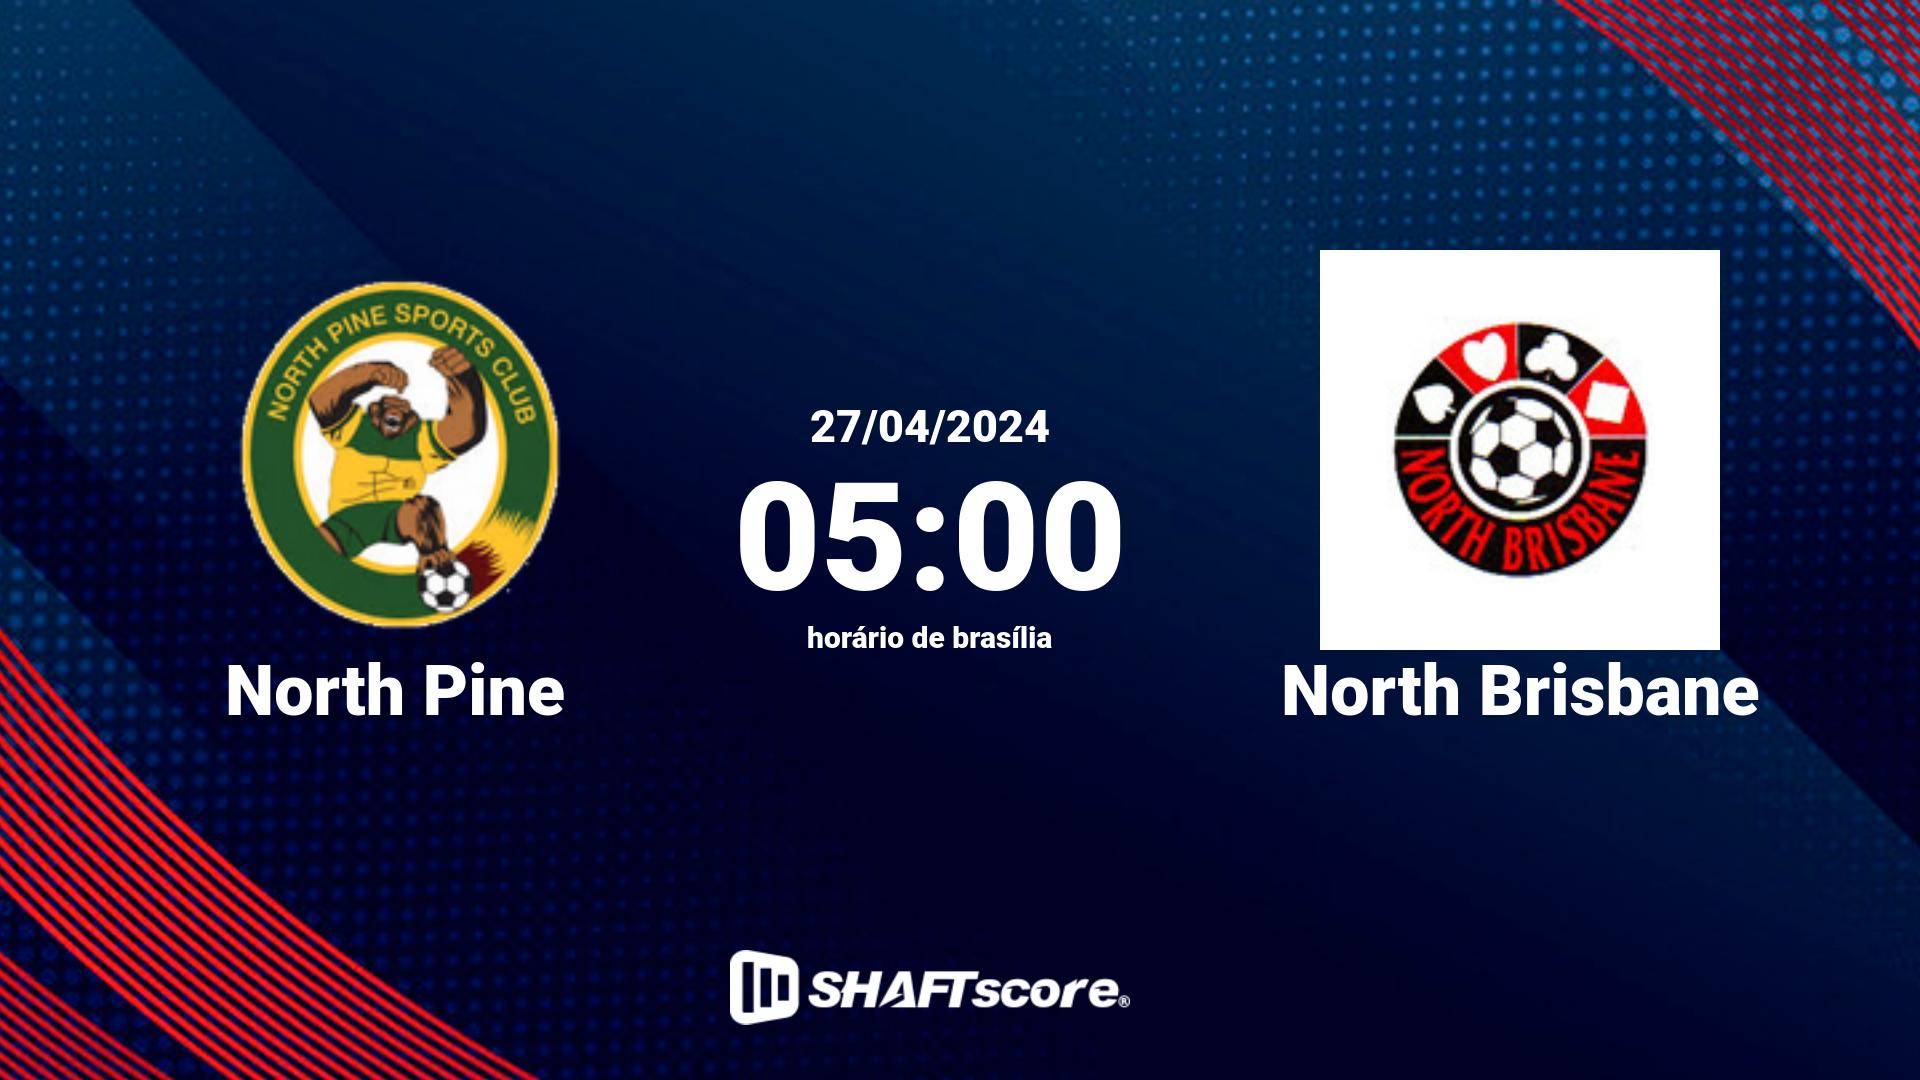 Estatísticas do jogo North Pine vs North Brisbane 27.04 05:00